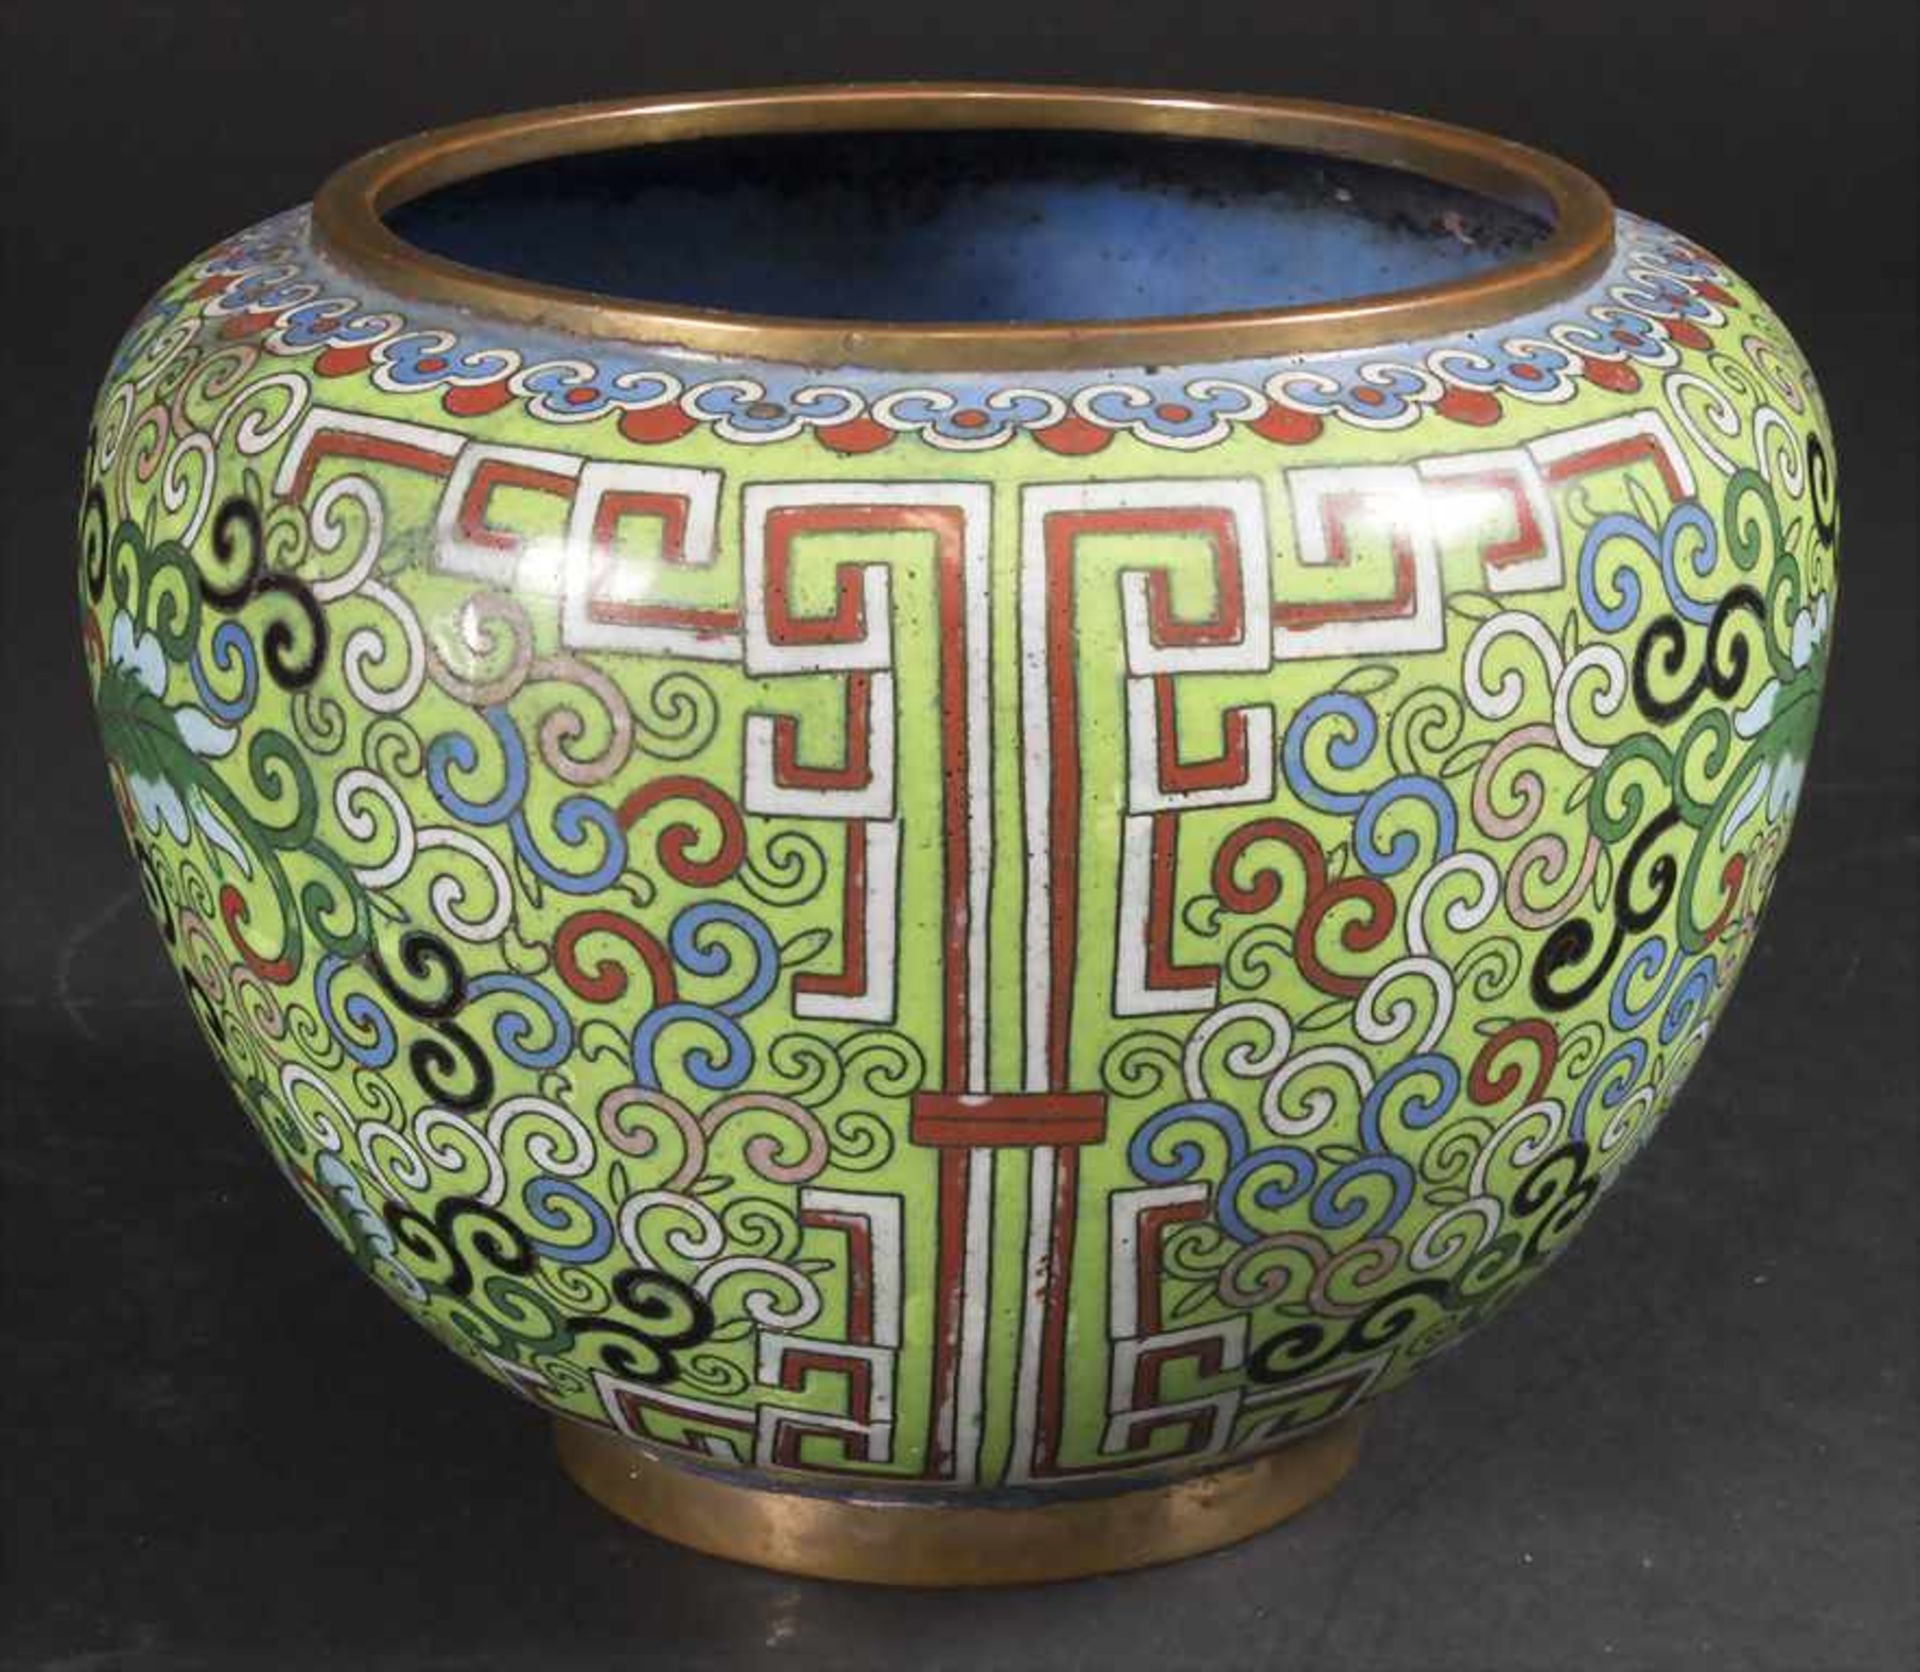 Cloisonné-Ziervase / An enamelled decorative vase, China, Qing-Dynastie (1644-1911), 19. Jh. - Image 4 of 7